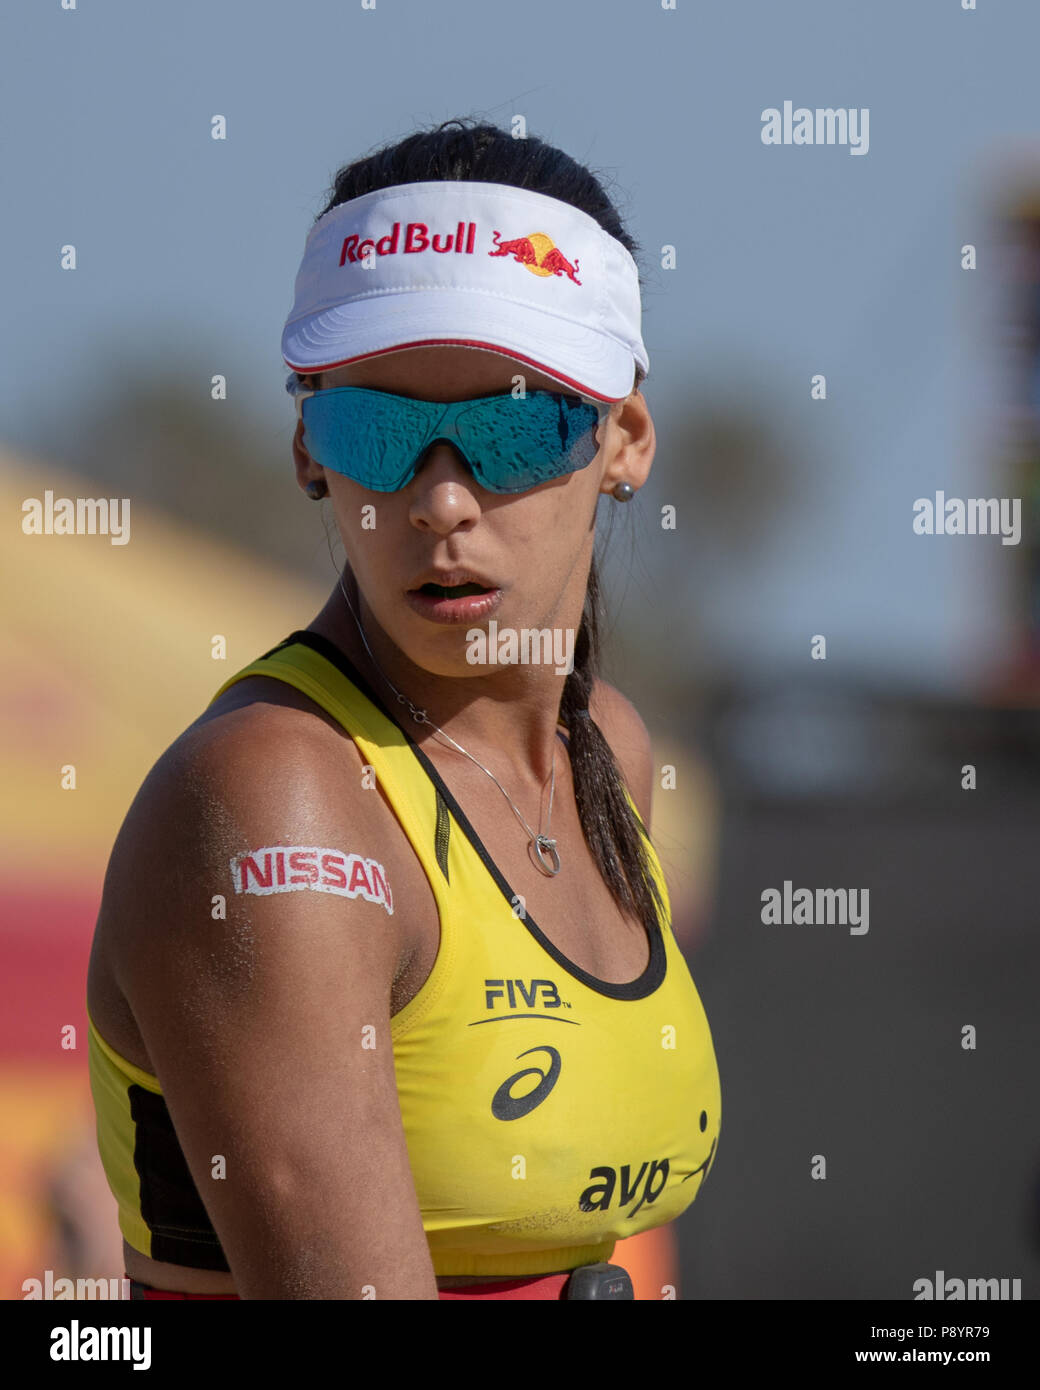 The sand reflects in the sunglasses of Eduarda Duda Lisboa at